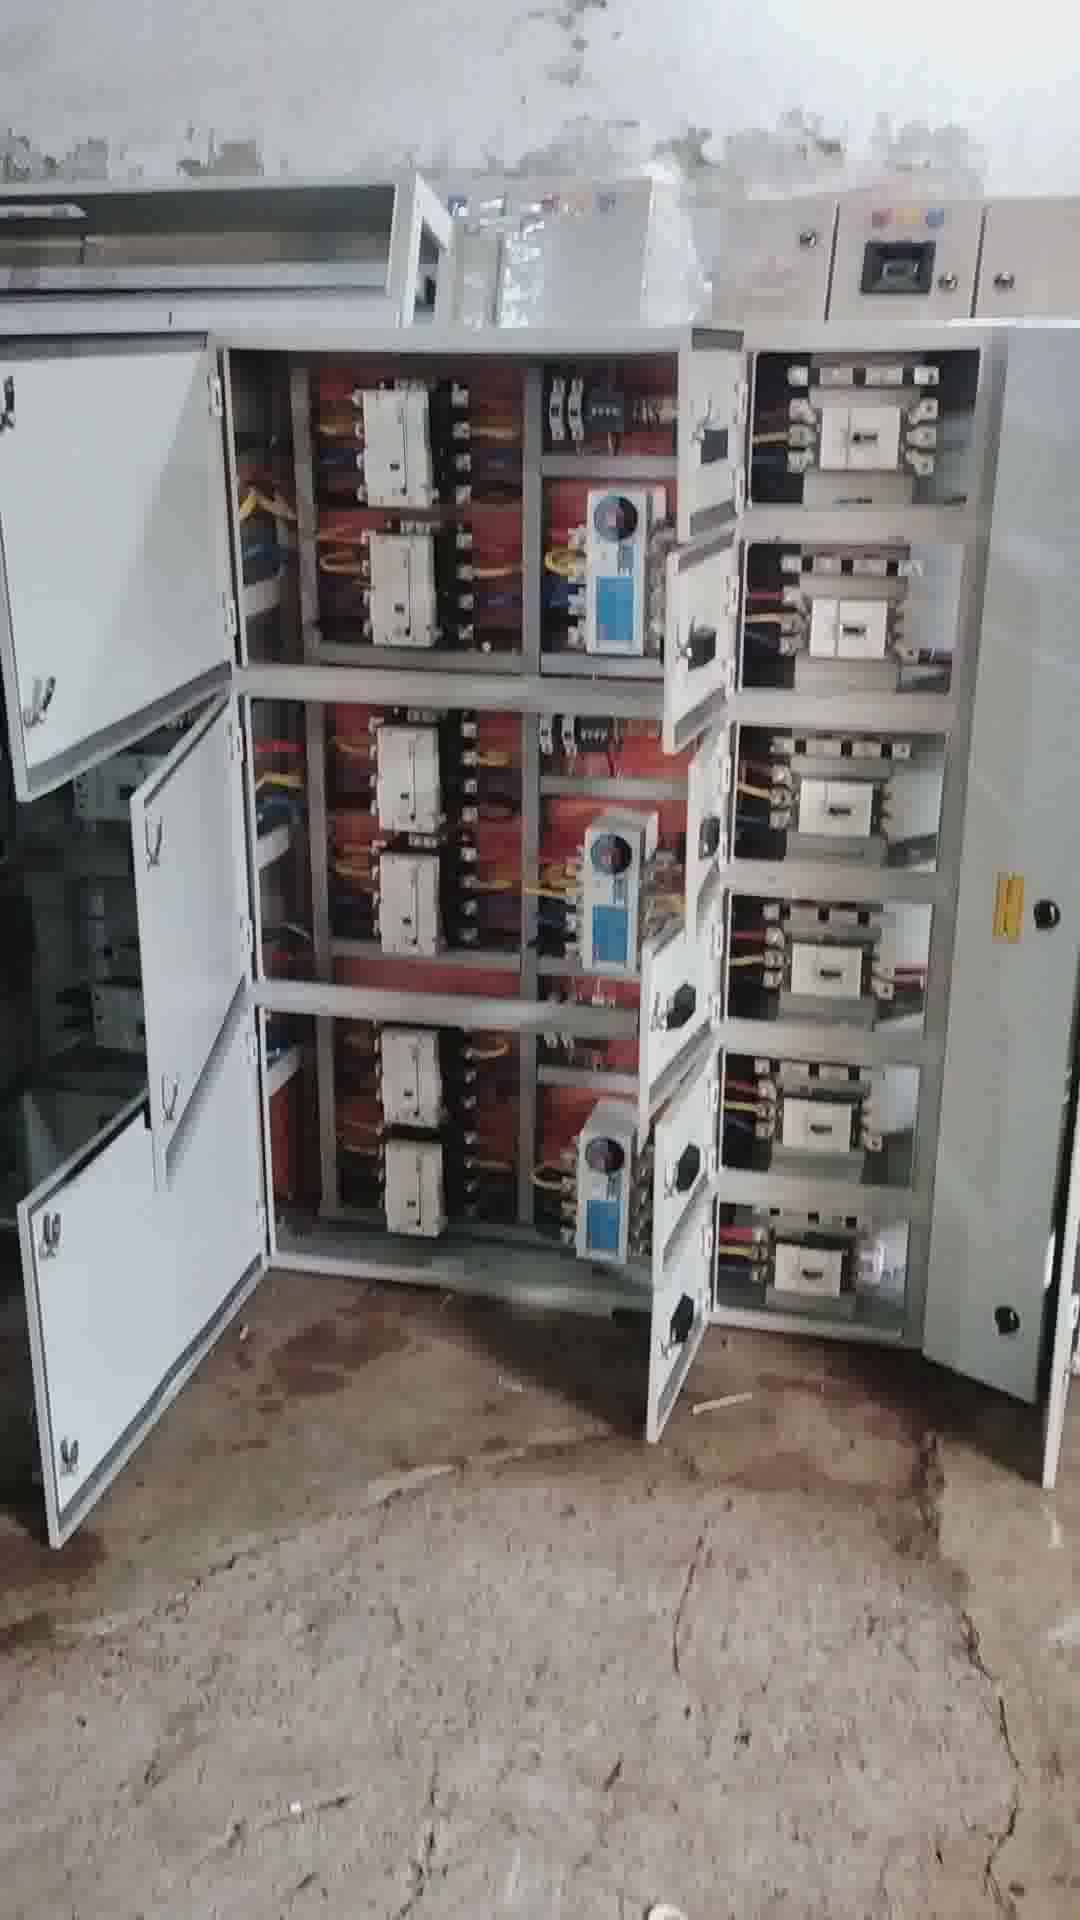 amf panel in gurugram.
m.s power control in gurugram
9313150879.9312528299